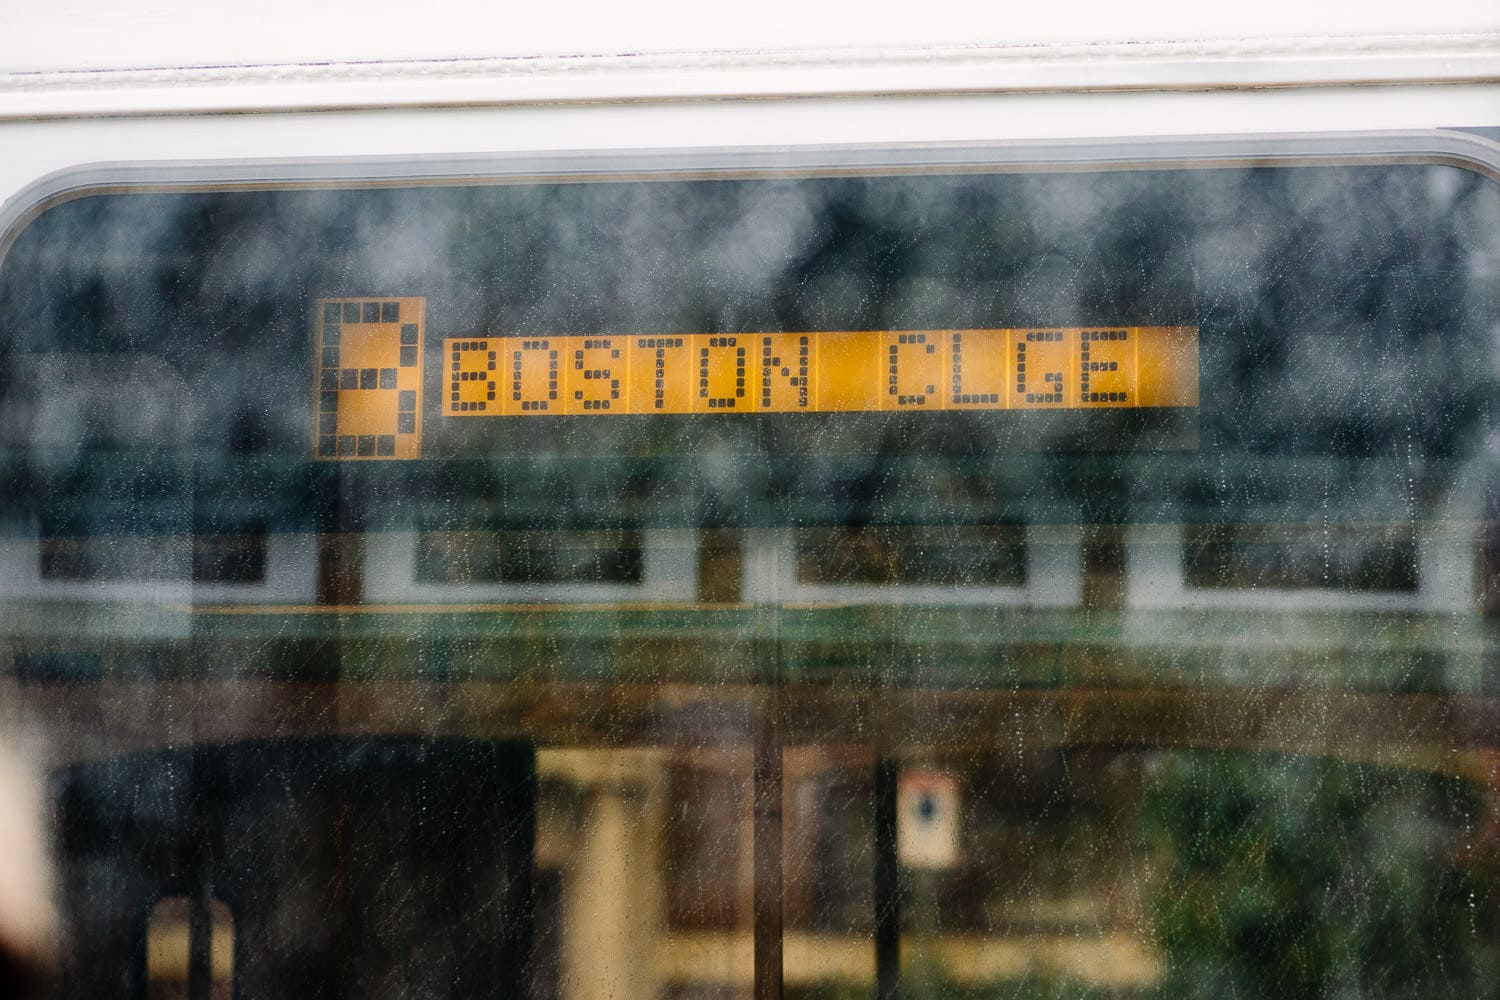 MBTA green line Boston College sign in the rain